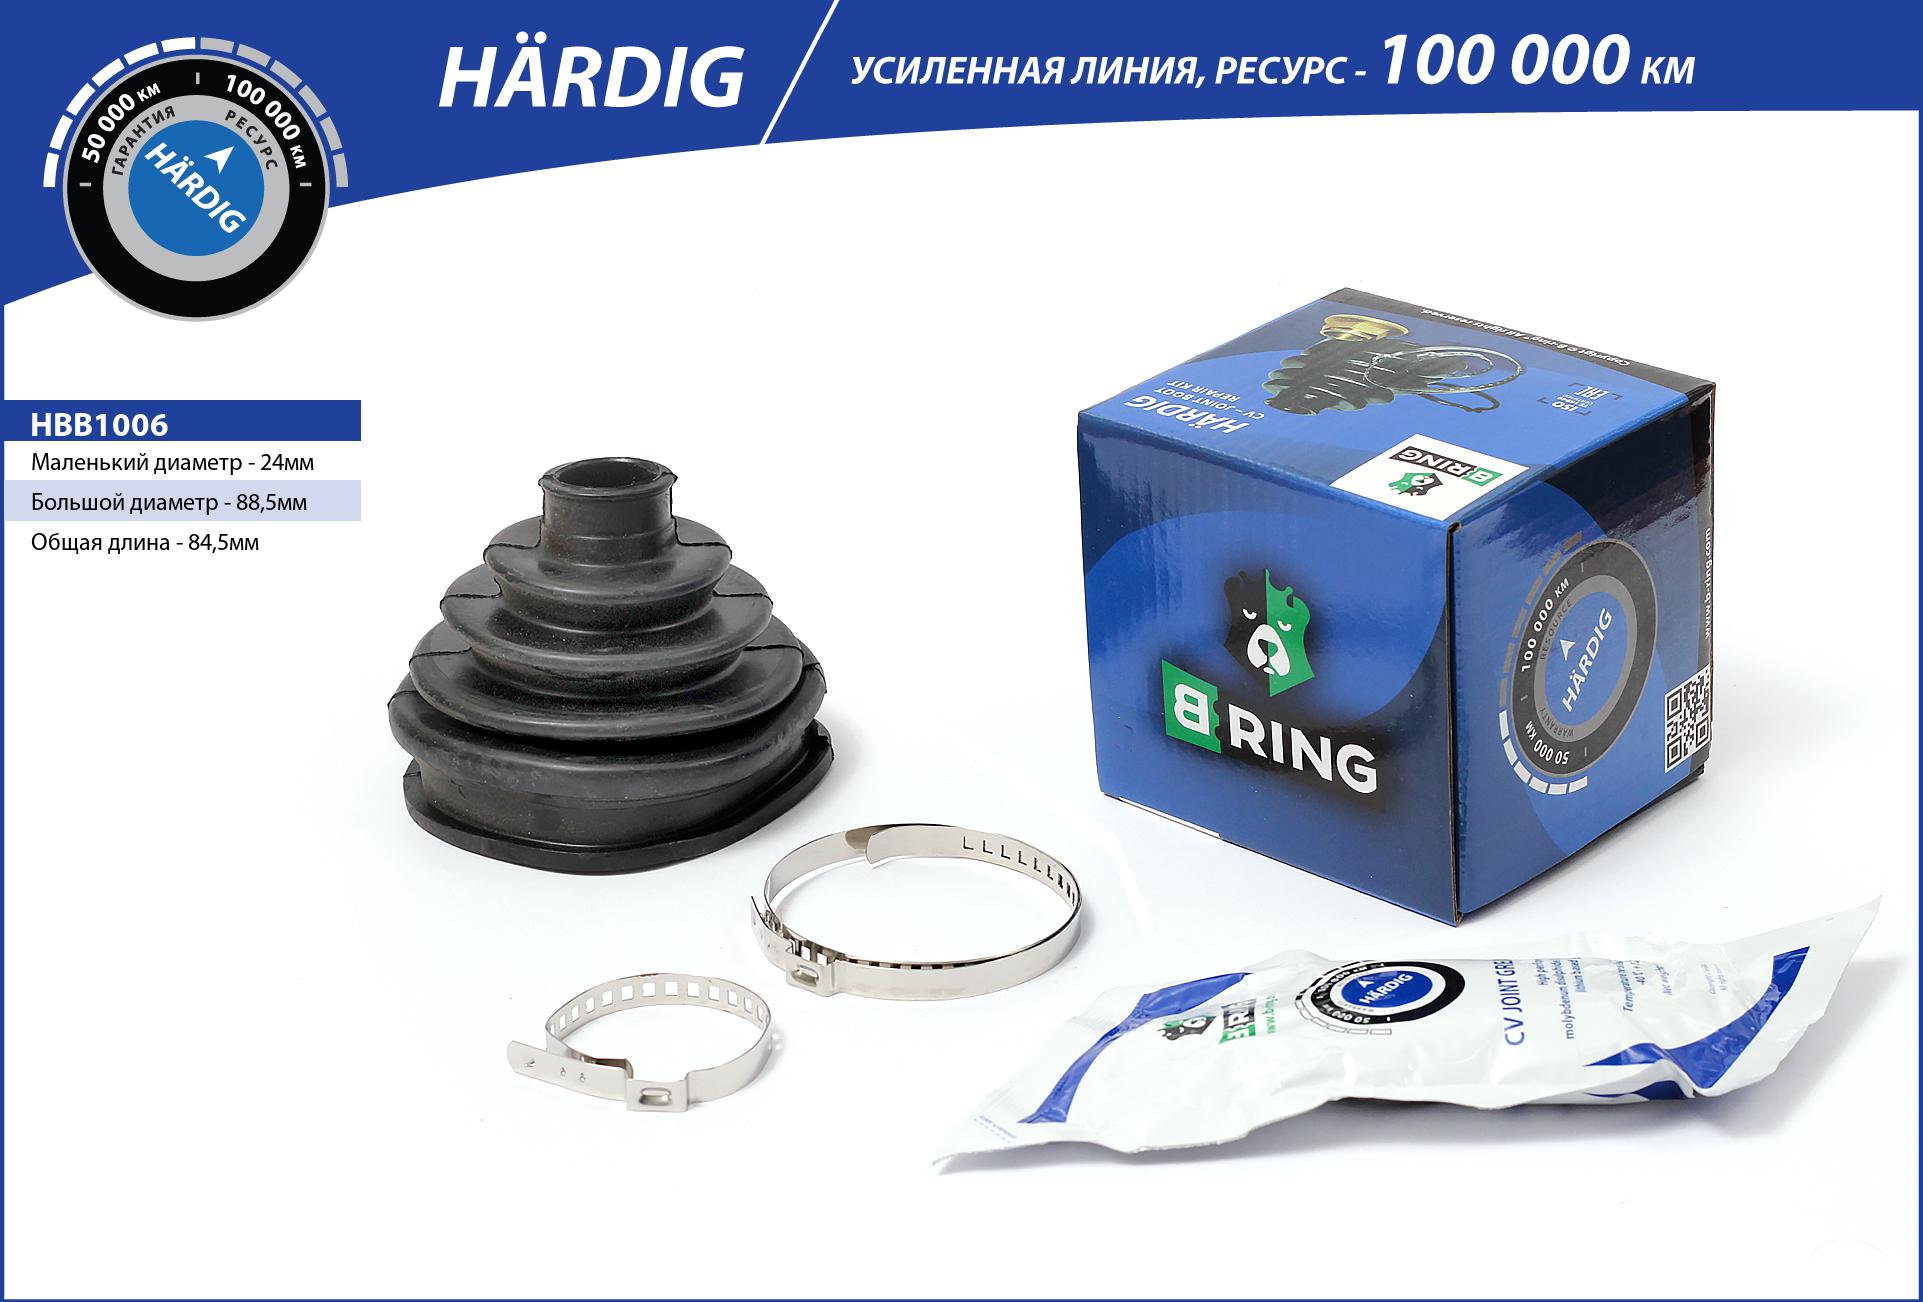 B-RING HBB1006